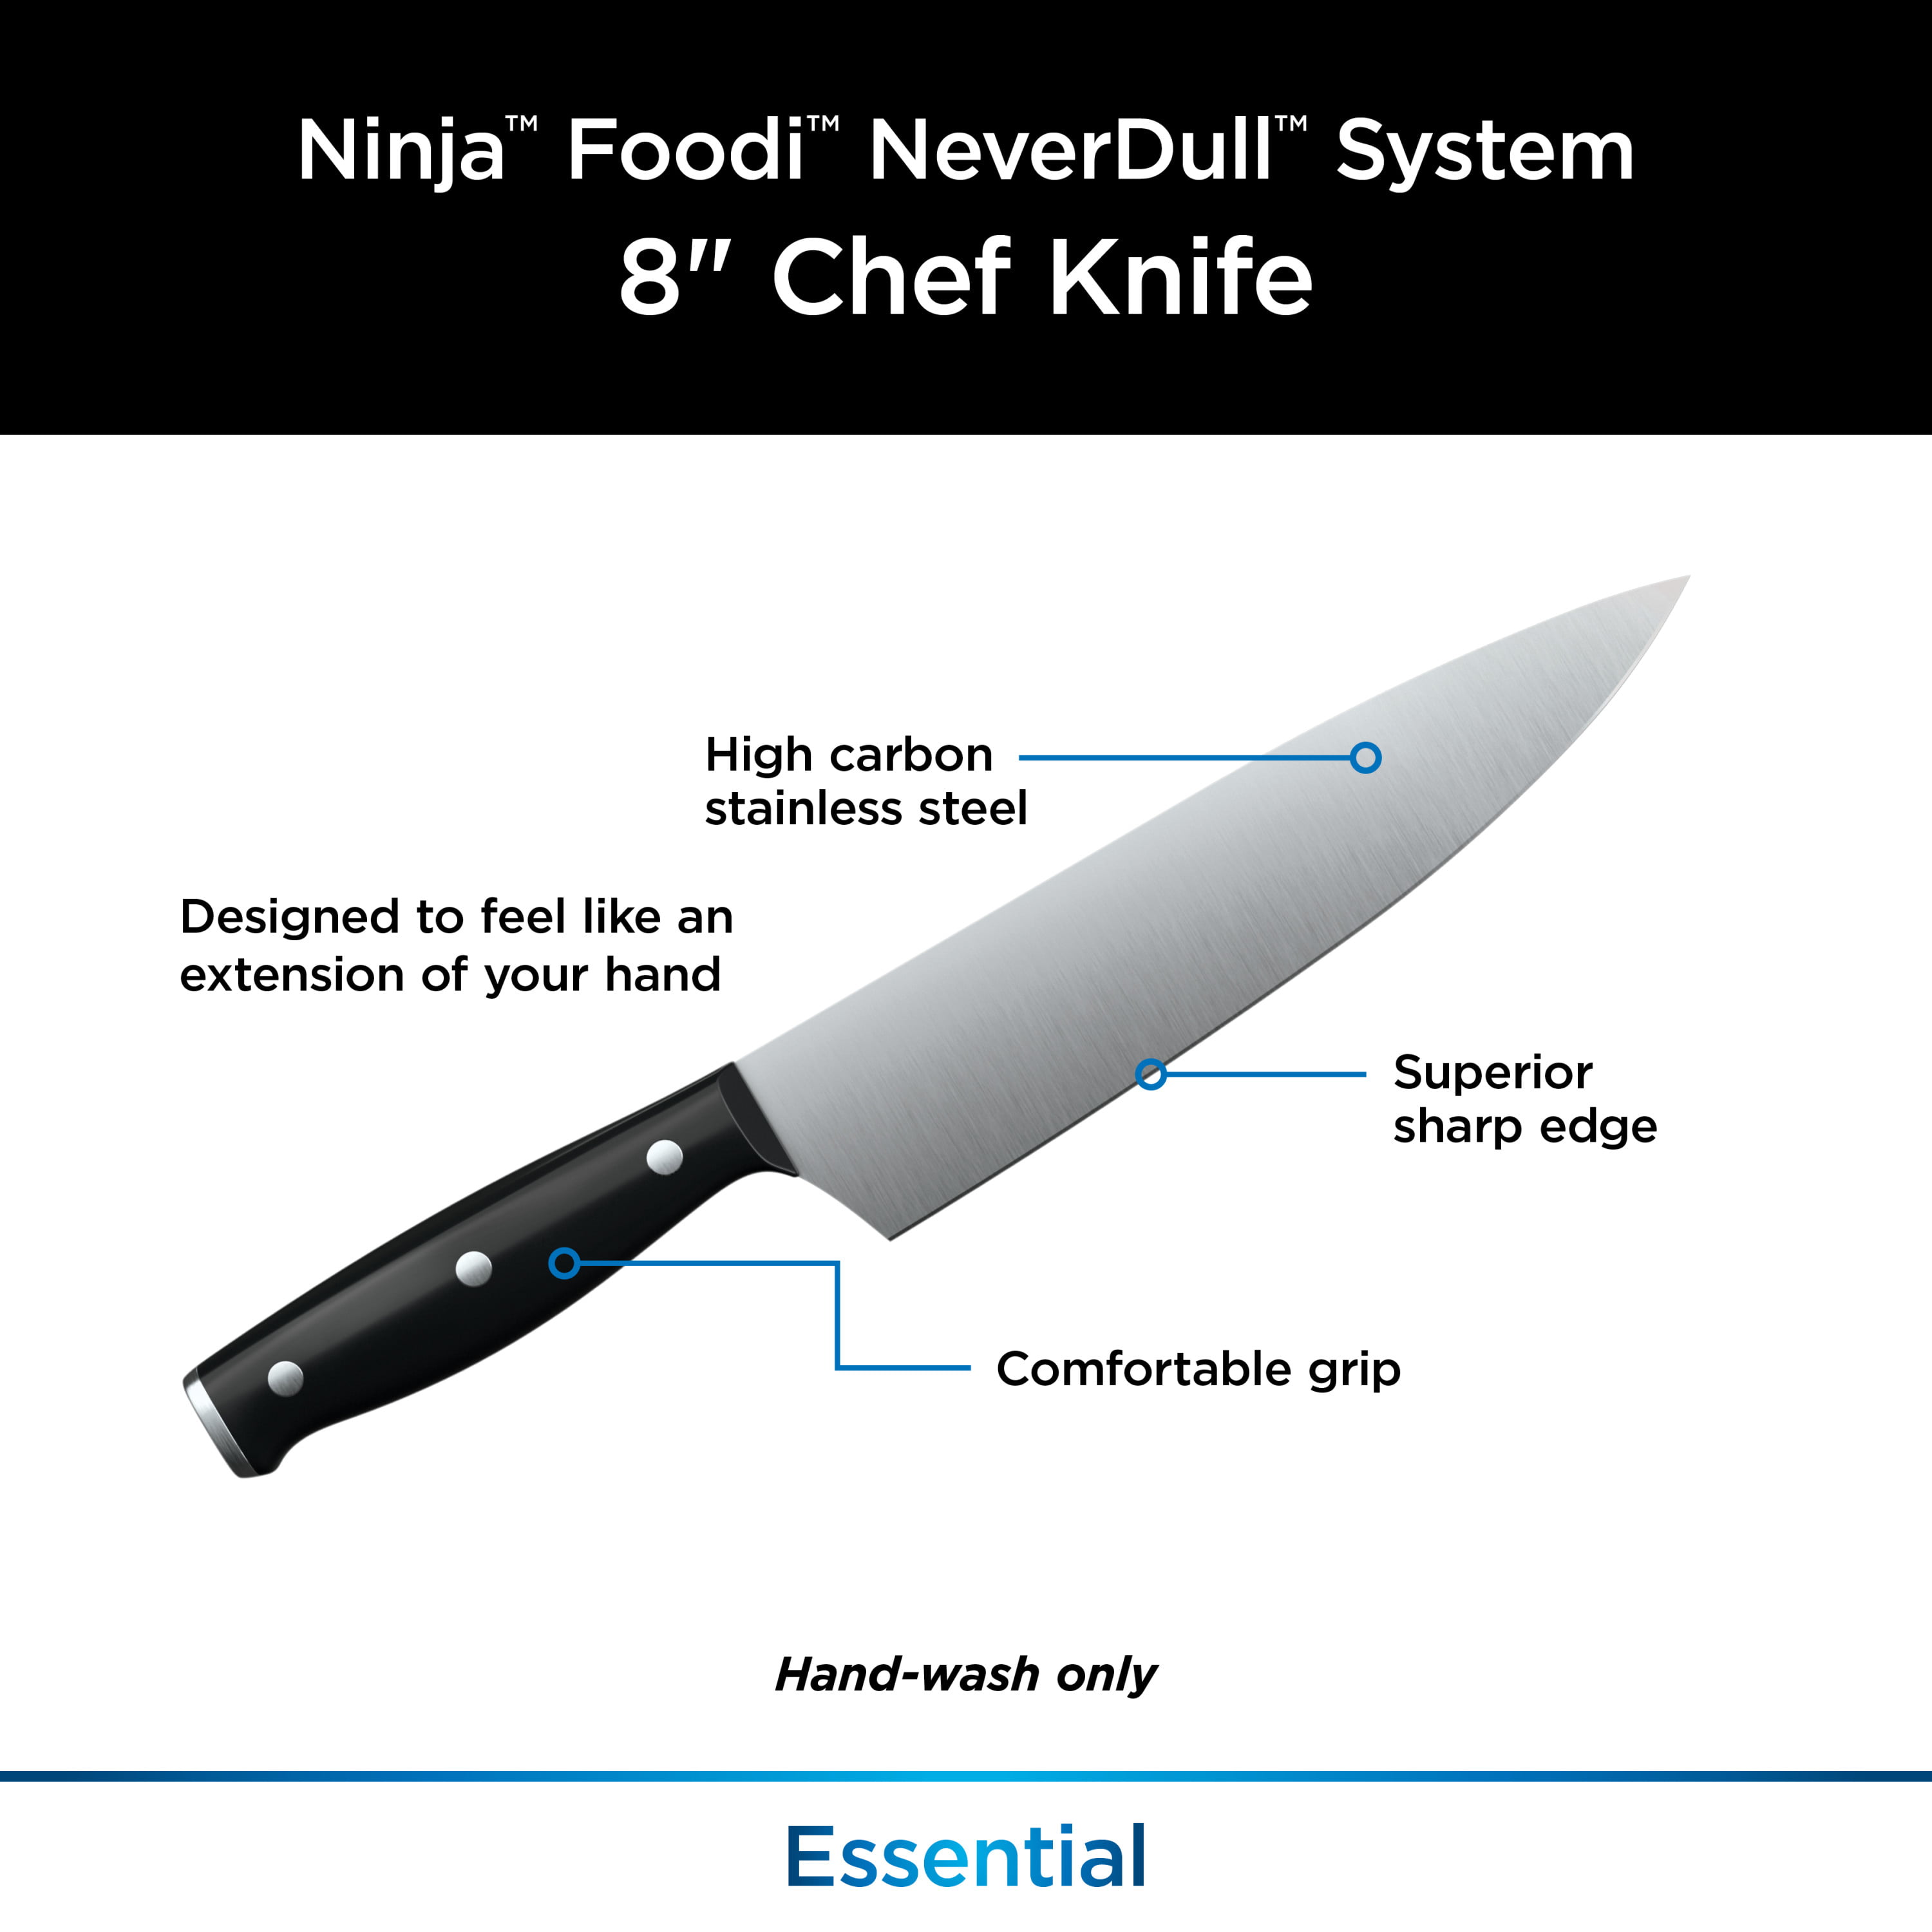  Ninja K30020 Foodi NeverDull System 8-Inch Chef Knife